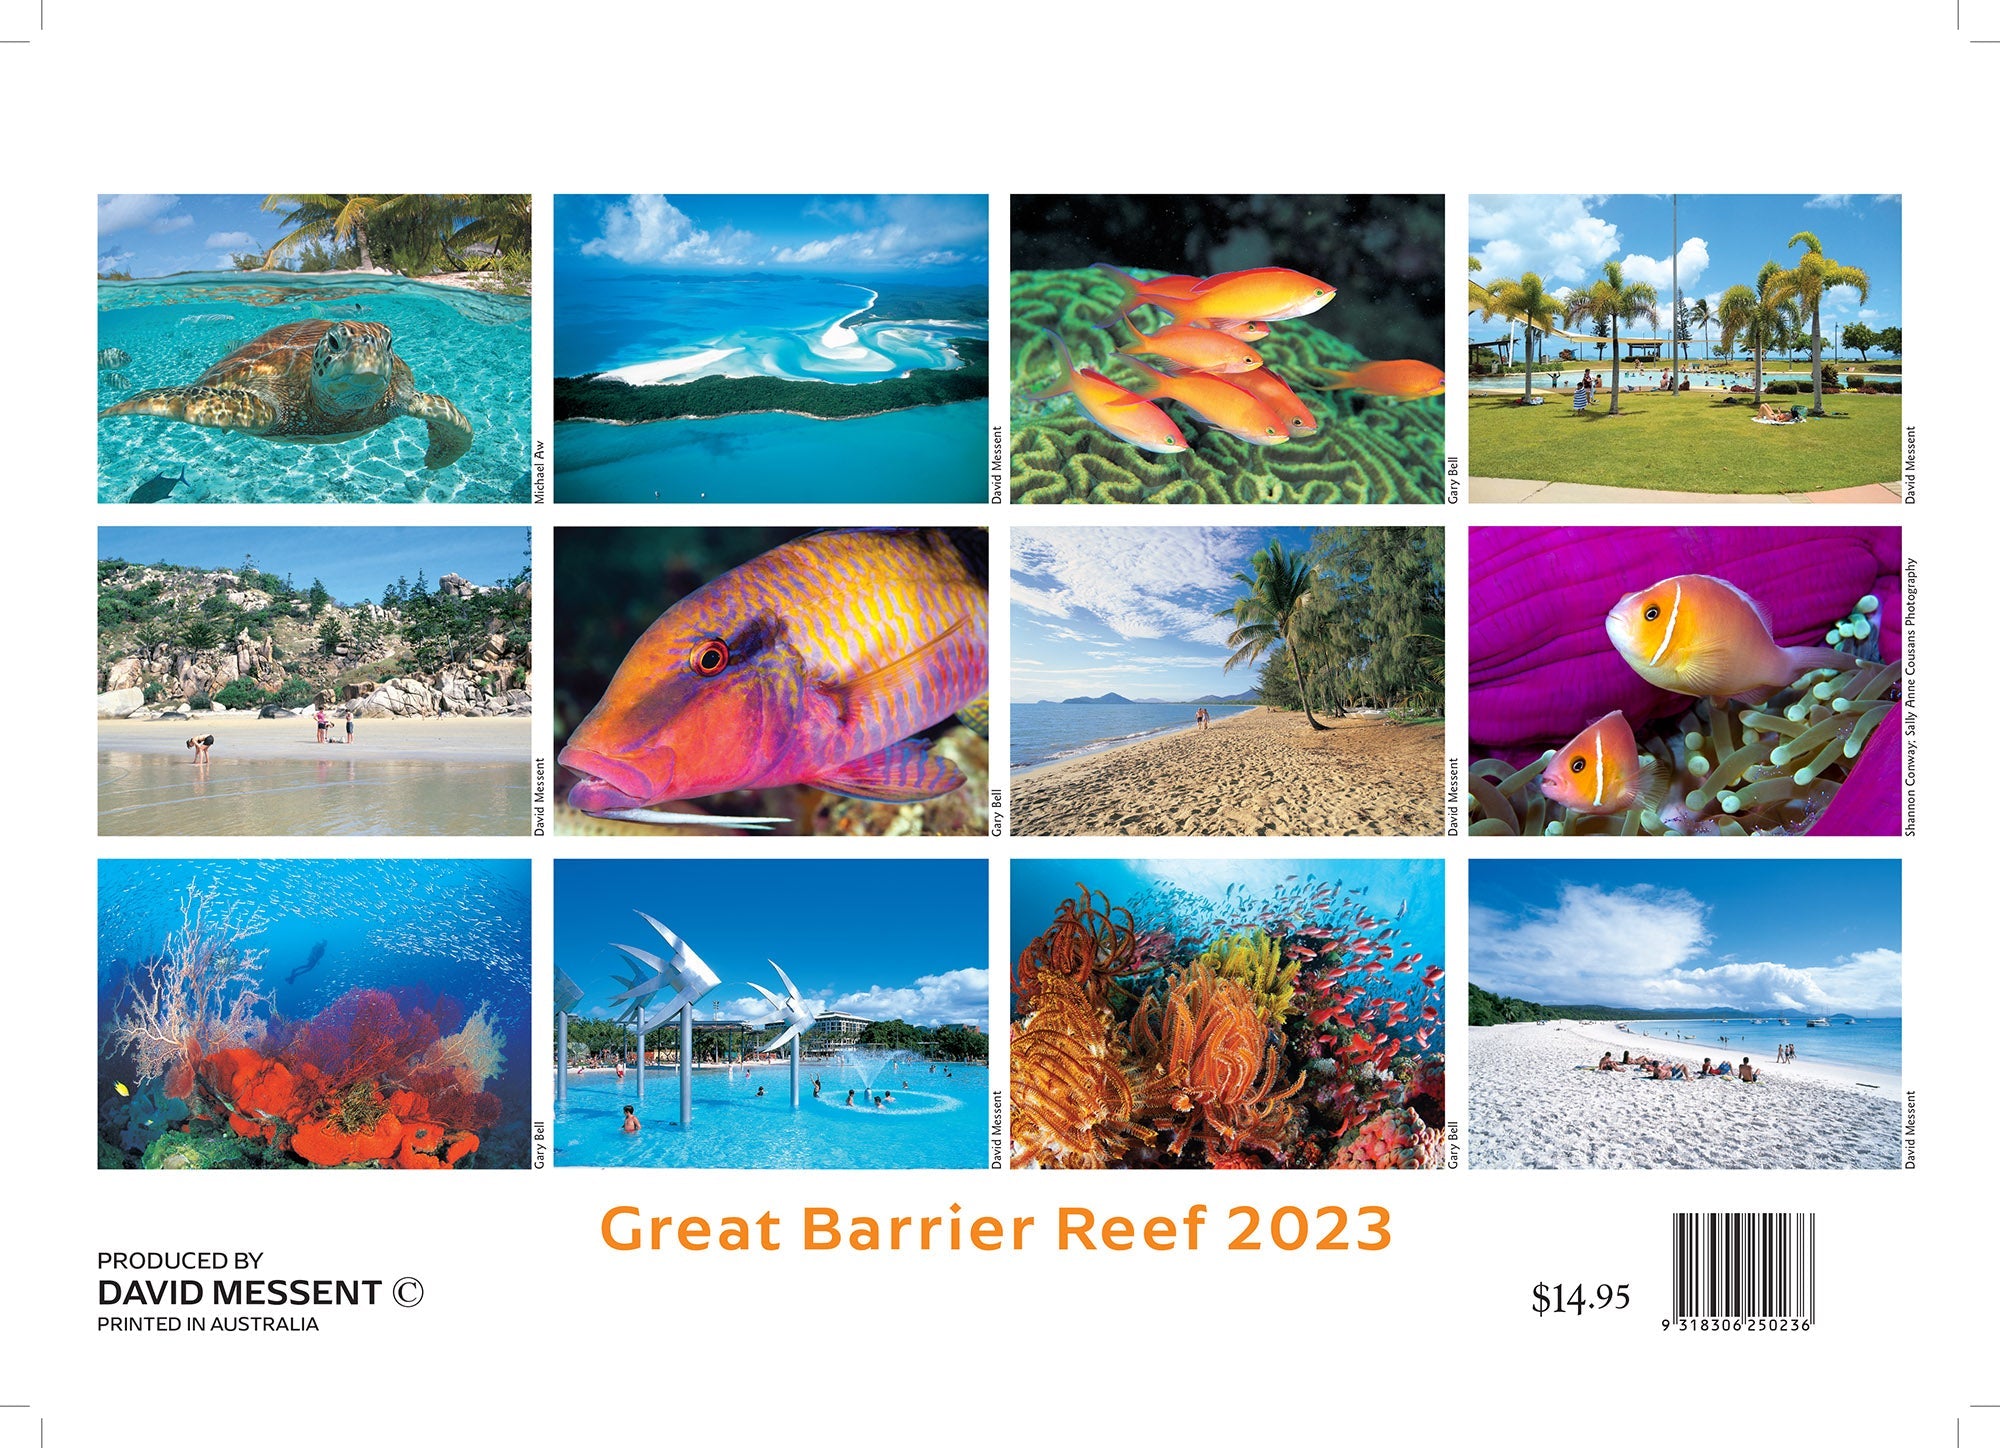 2023 Great Barrier Reef by David Messent - Horizontal Wall Calendar